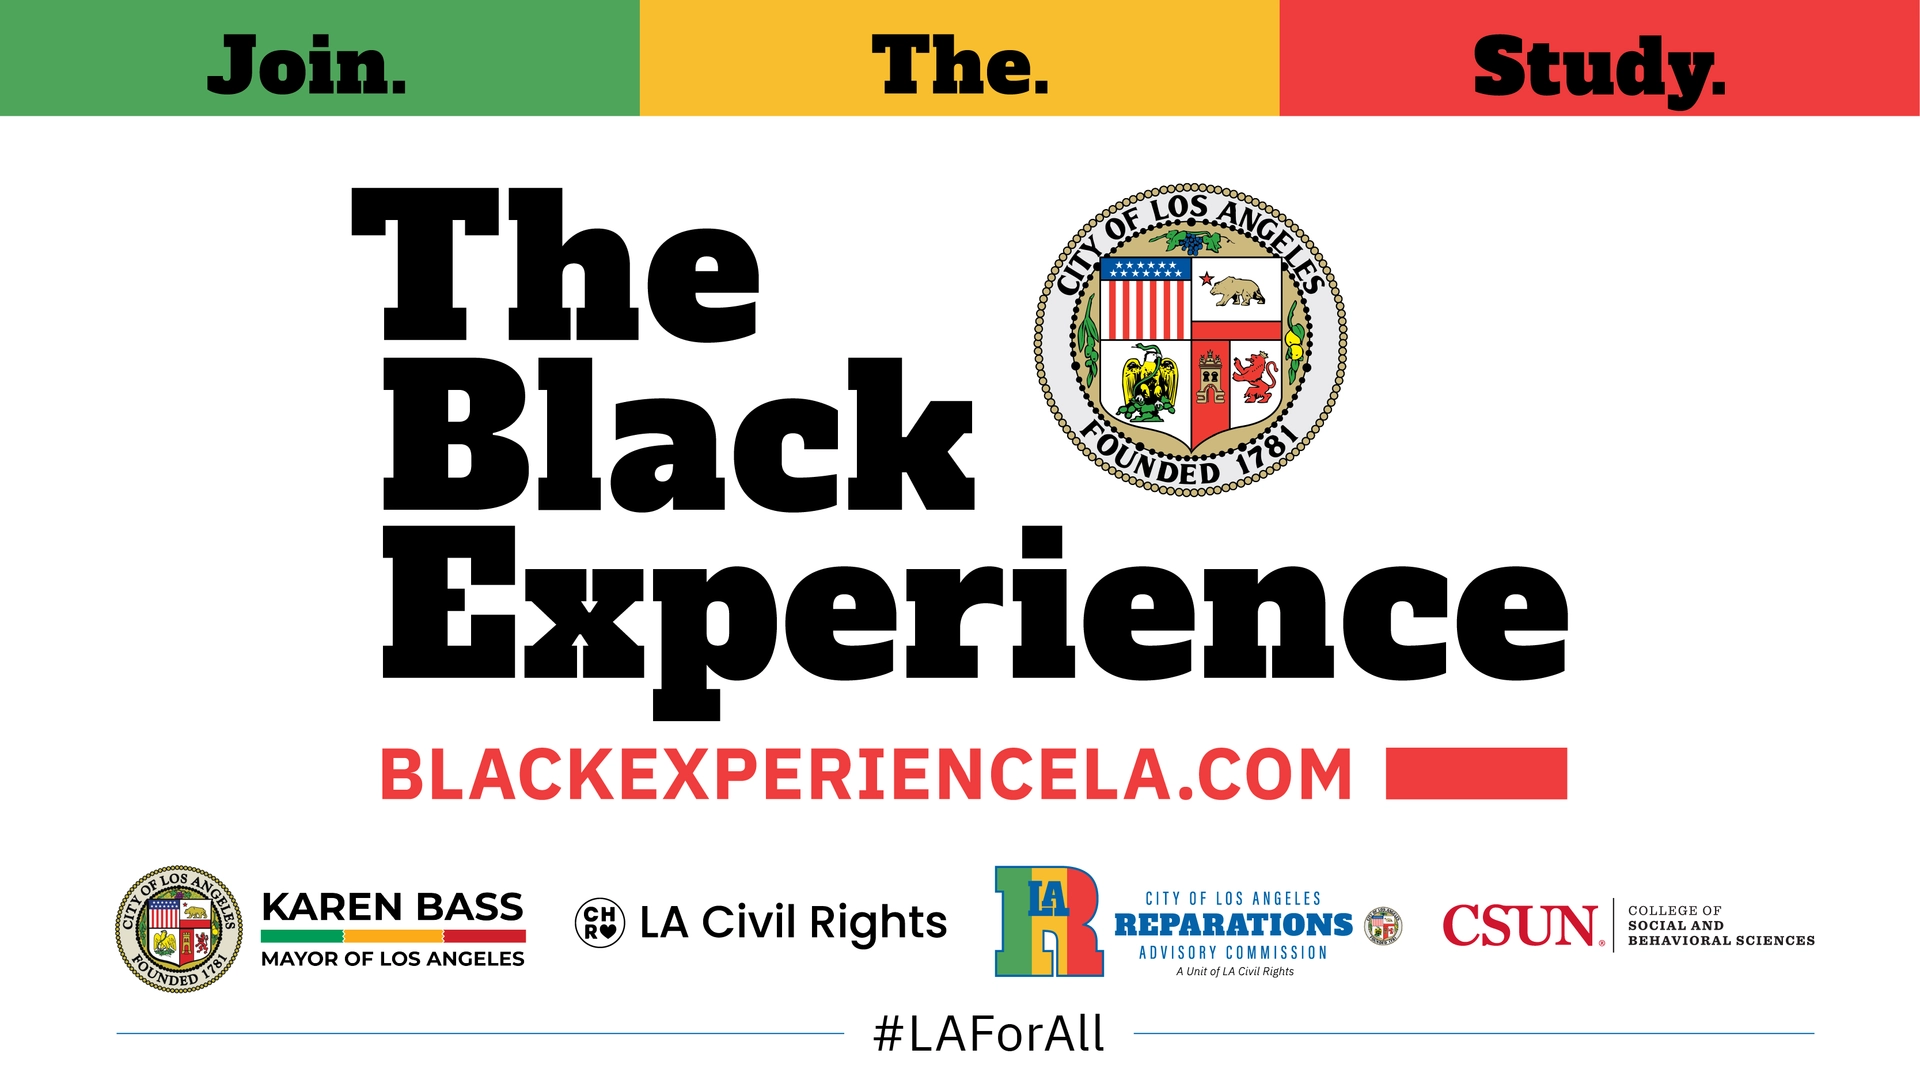 The Black Experience blackexperiencela.com survey